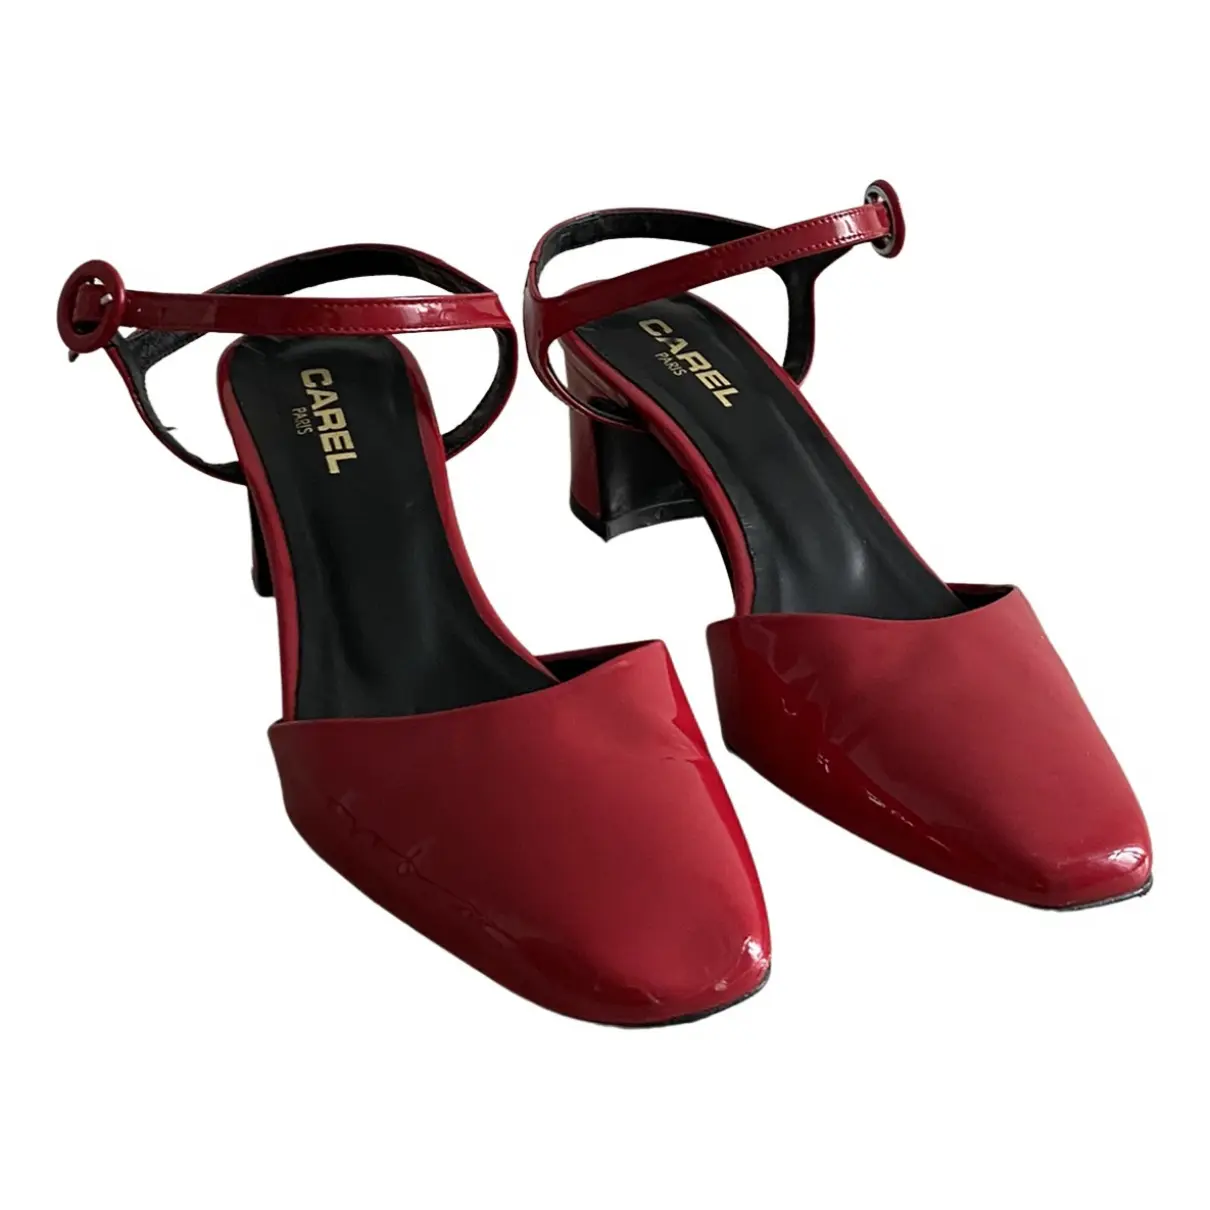 Patent leather heels Carel